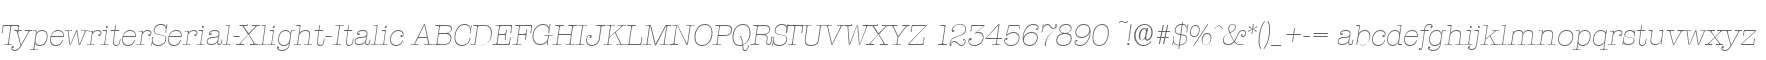 TypewriterSerial-Xlight-Italic